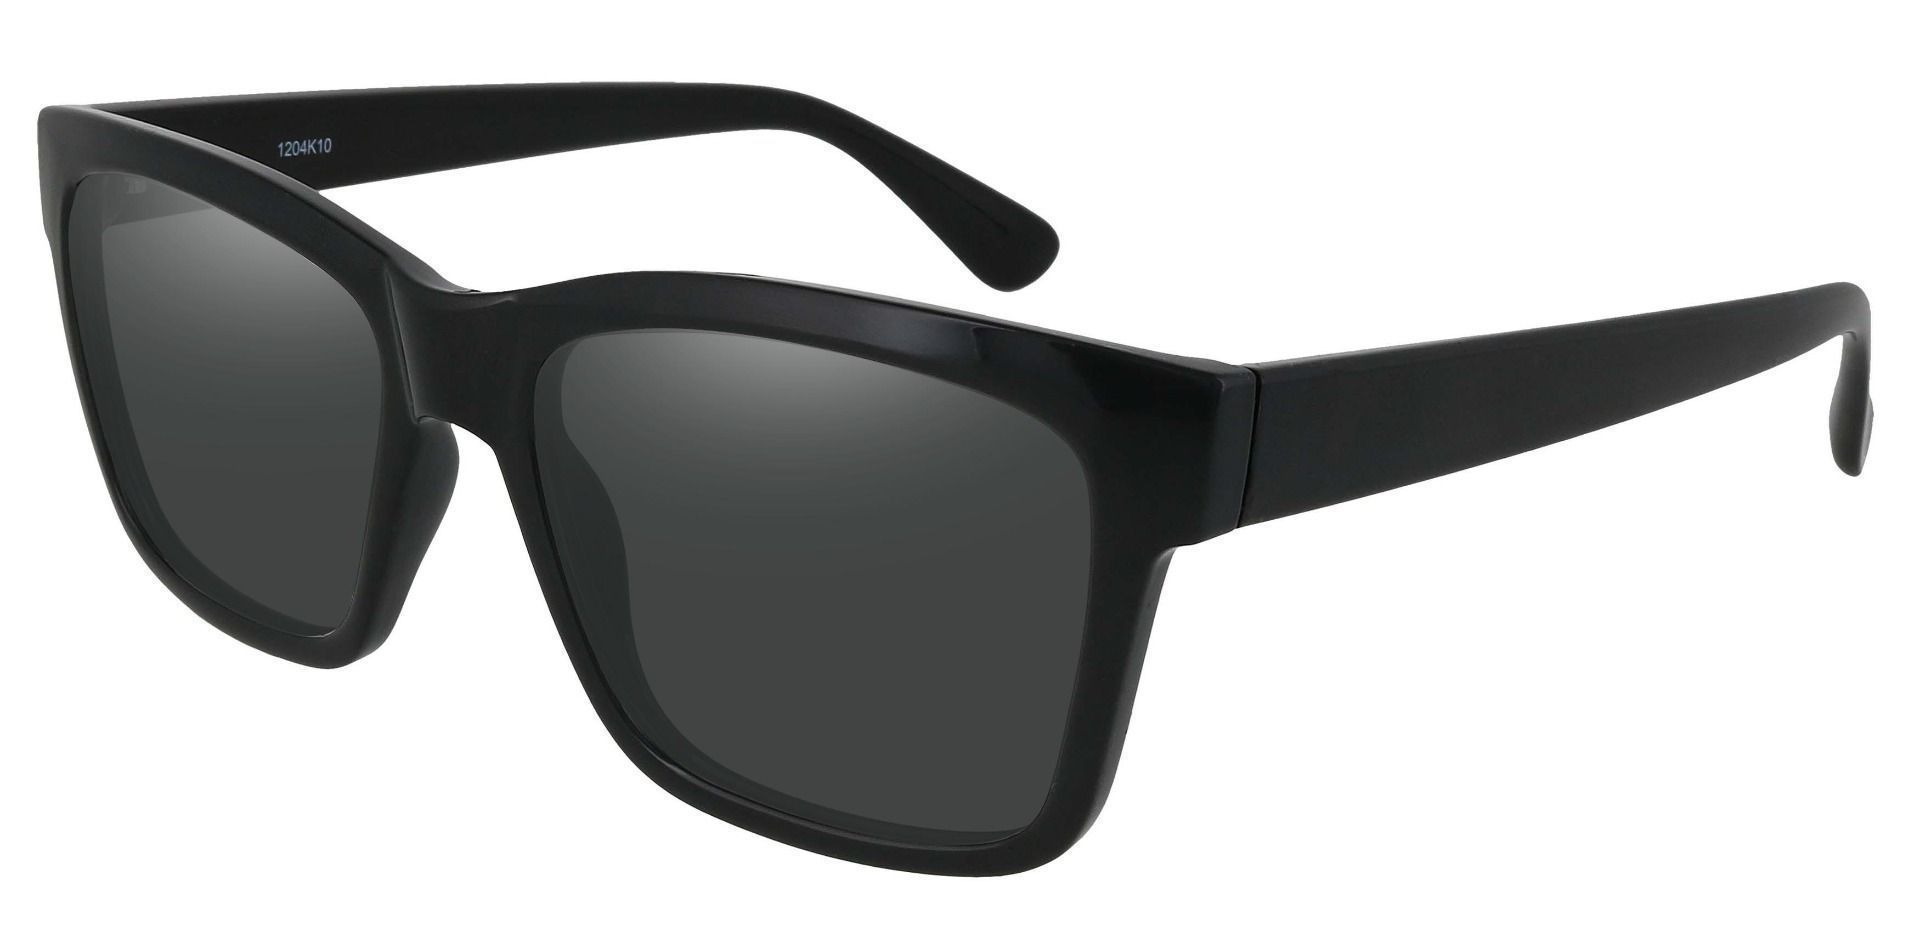 Brinley Square Prescription Sunglasses - Black Frame With Gray Lenses